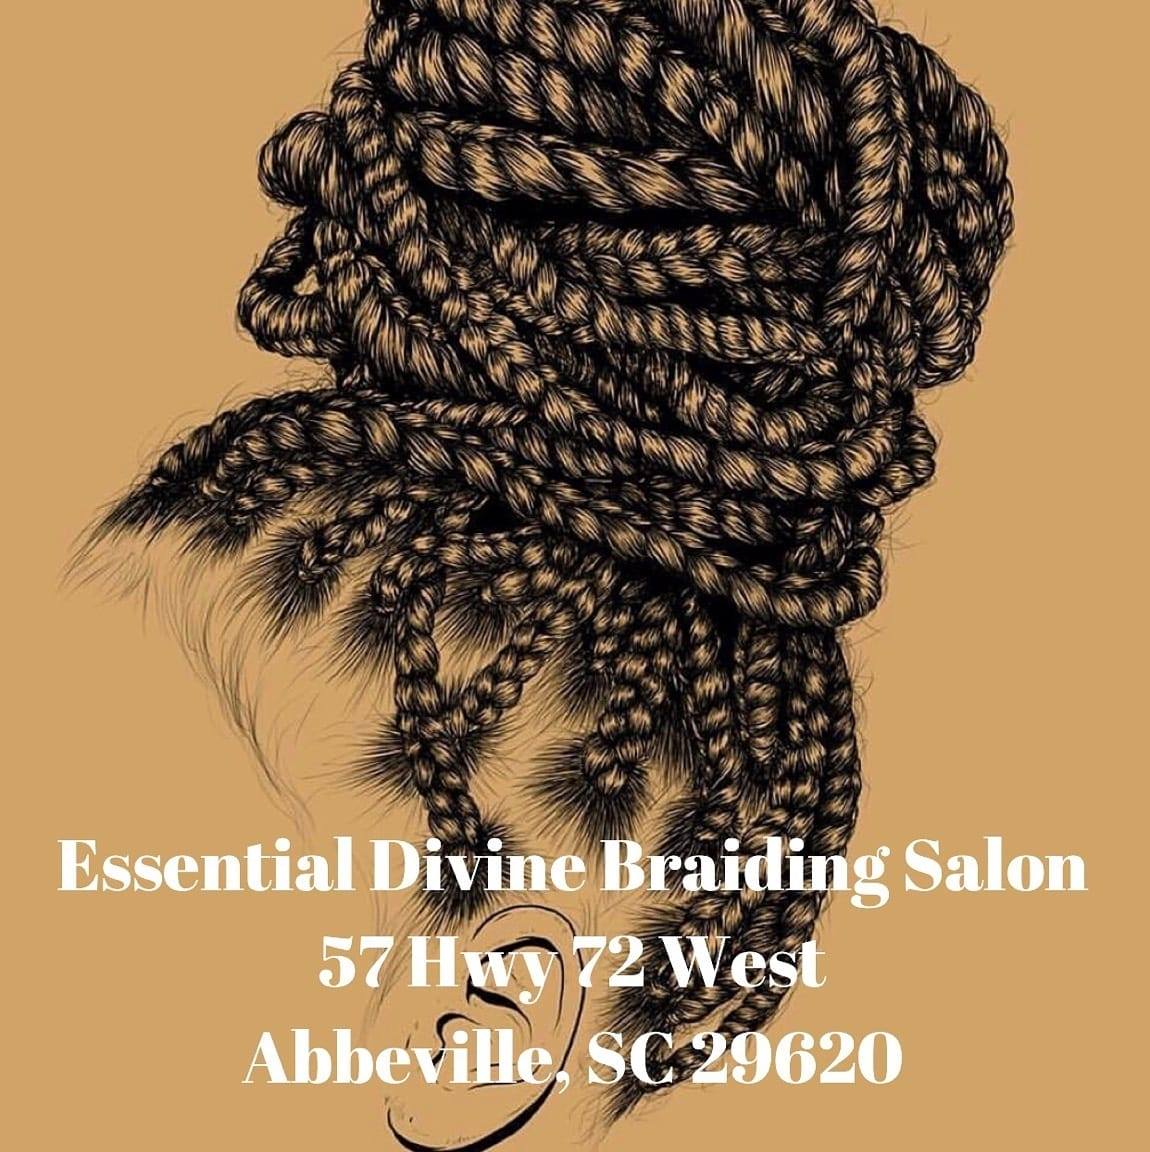 Essential Divine Braiding salon 407 Vienna St, Abbeville South Carolina 29620